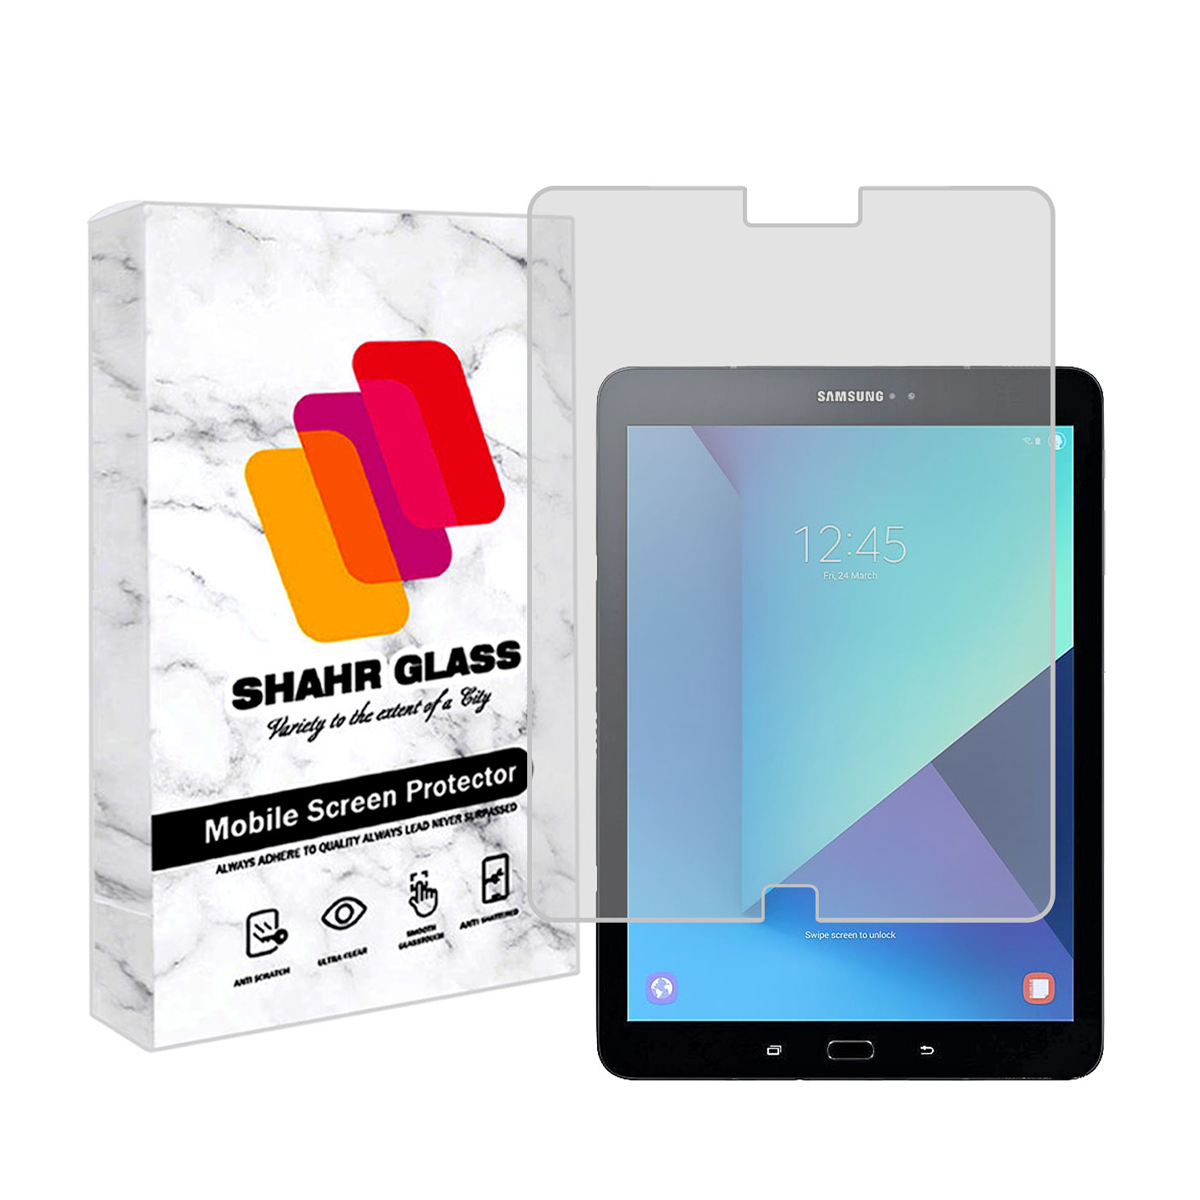 گلس تبلت سامسونگ Galaxy Tab S3 9.7 شهر گلس مدل TS2SHA-بی رنگ شفاف